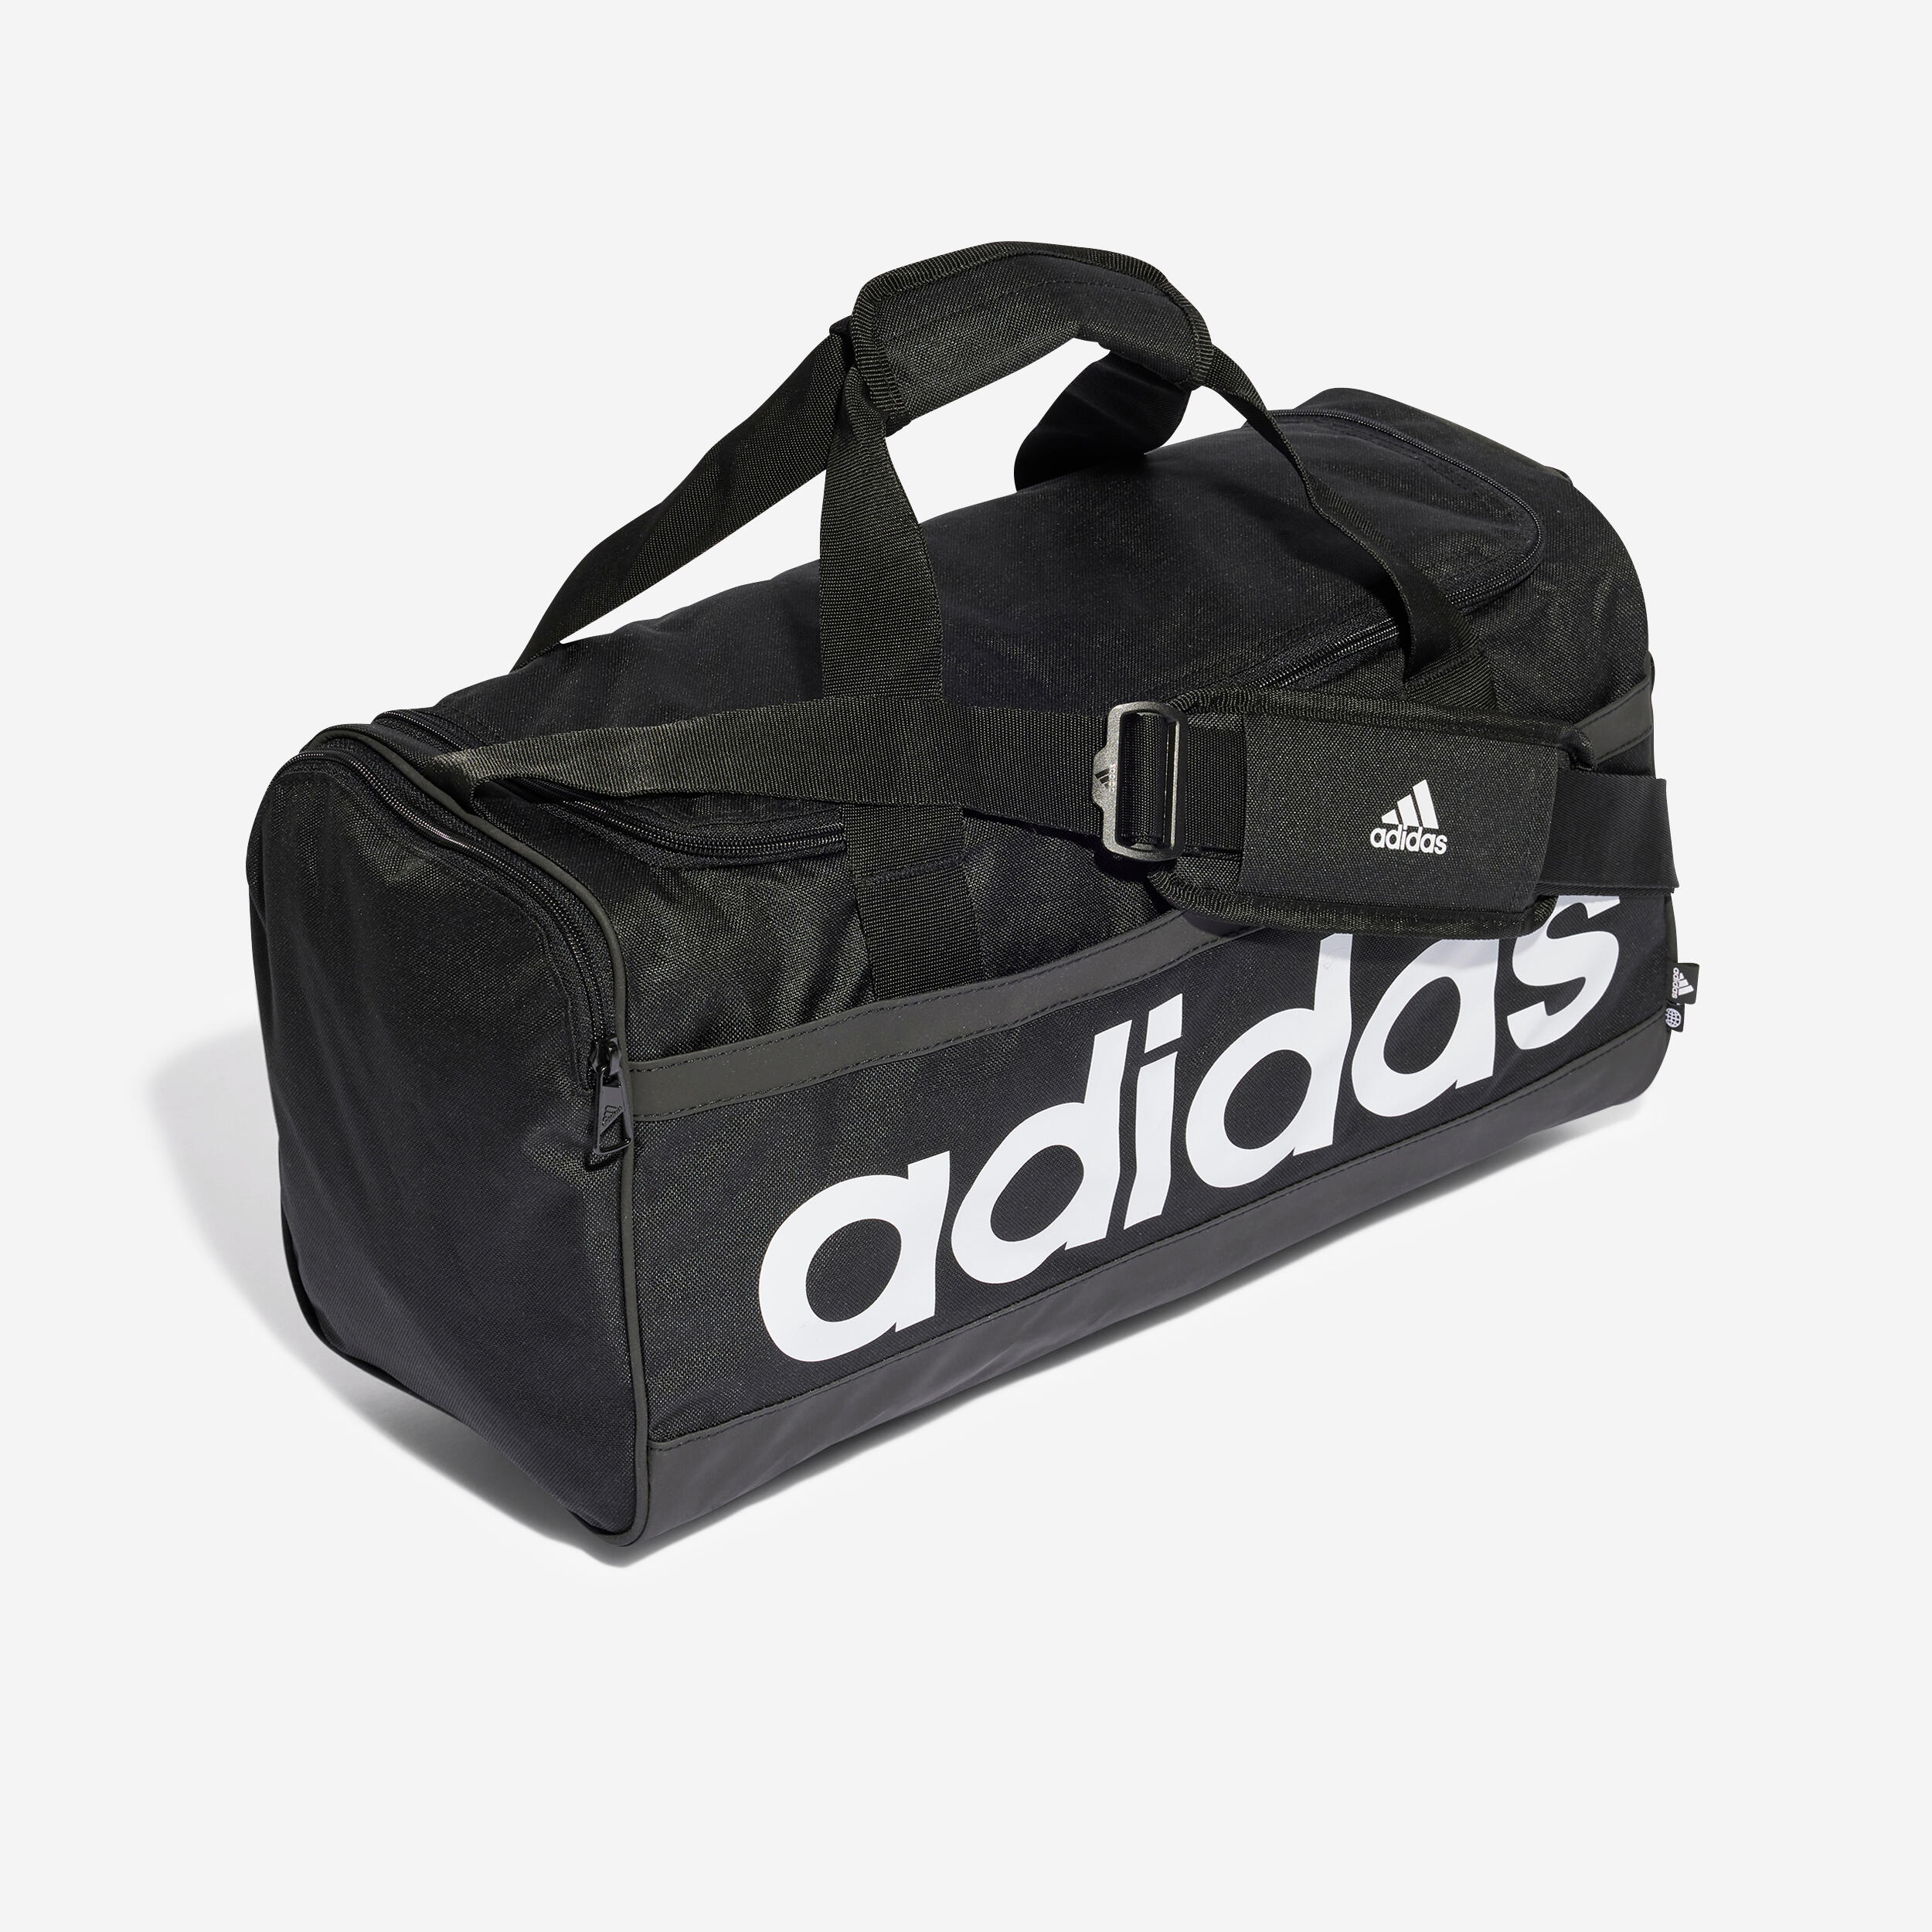 ADIDAS Duffle Bag Size S - Black/White